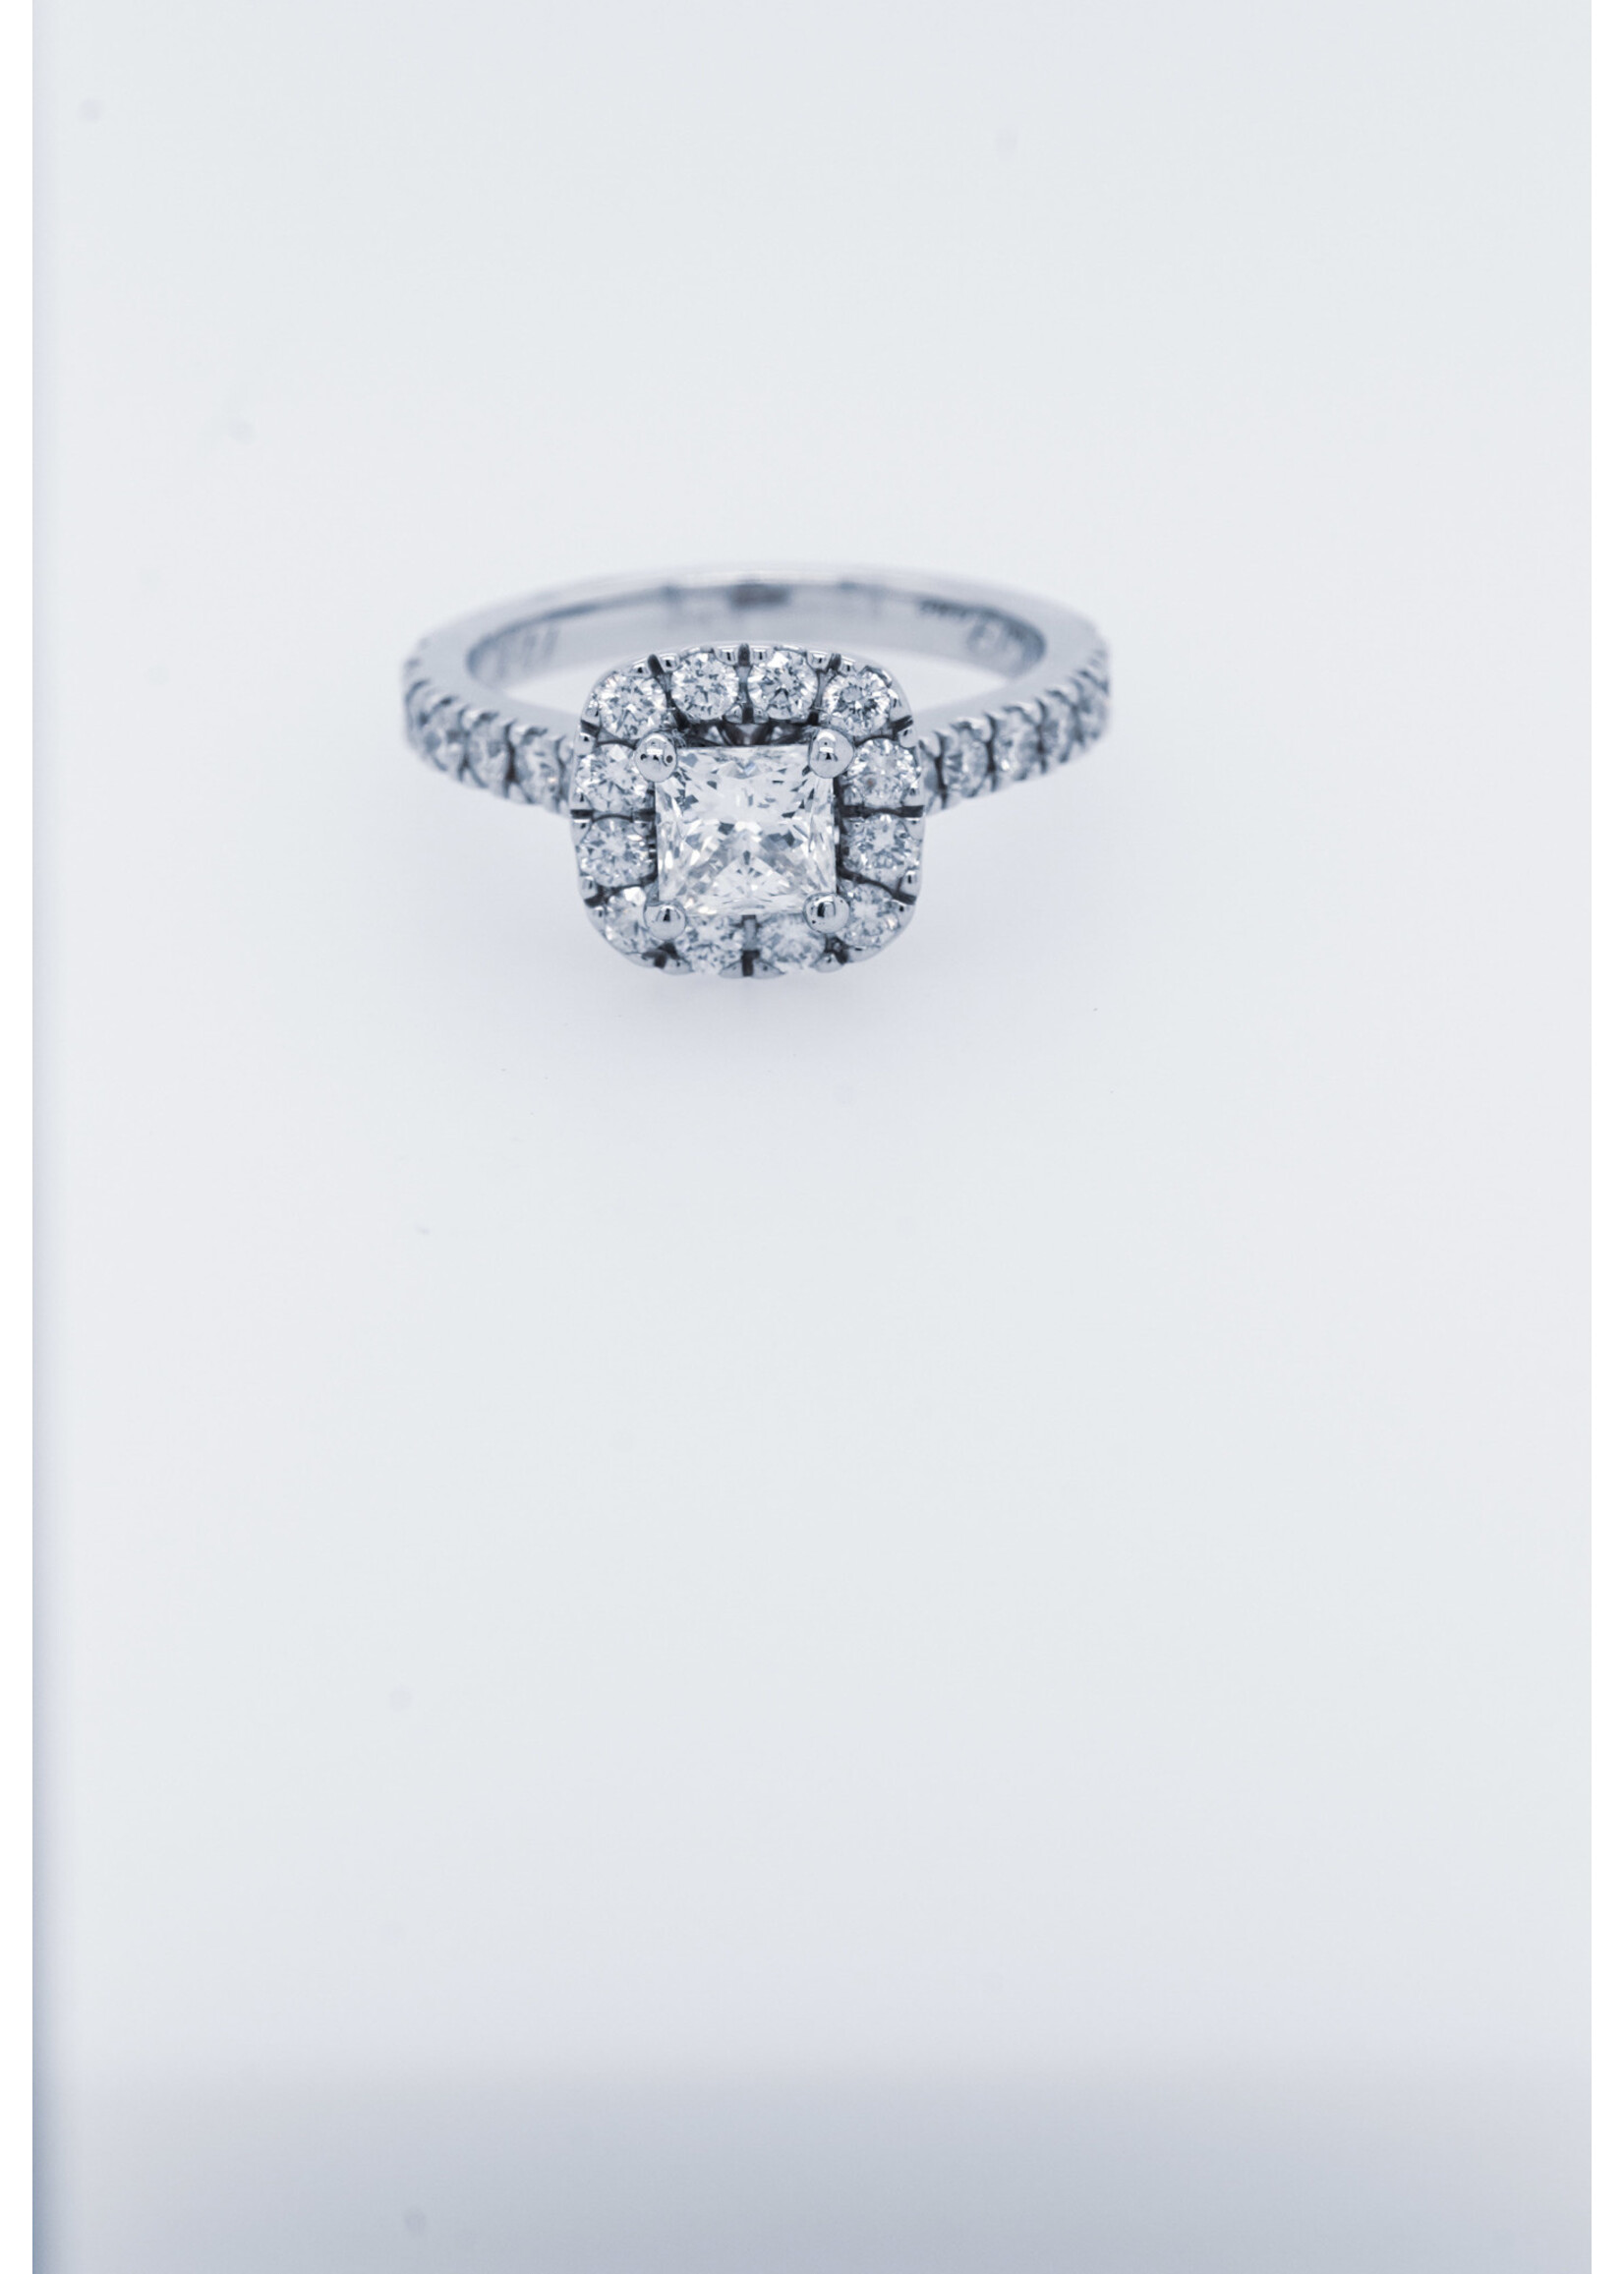 14KW 4.65g 1.75ctw (.75ctr) H/VS1 Princess Cut Diamond Neil Lane Halo Engagement Ring (size 5.75)